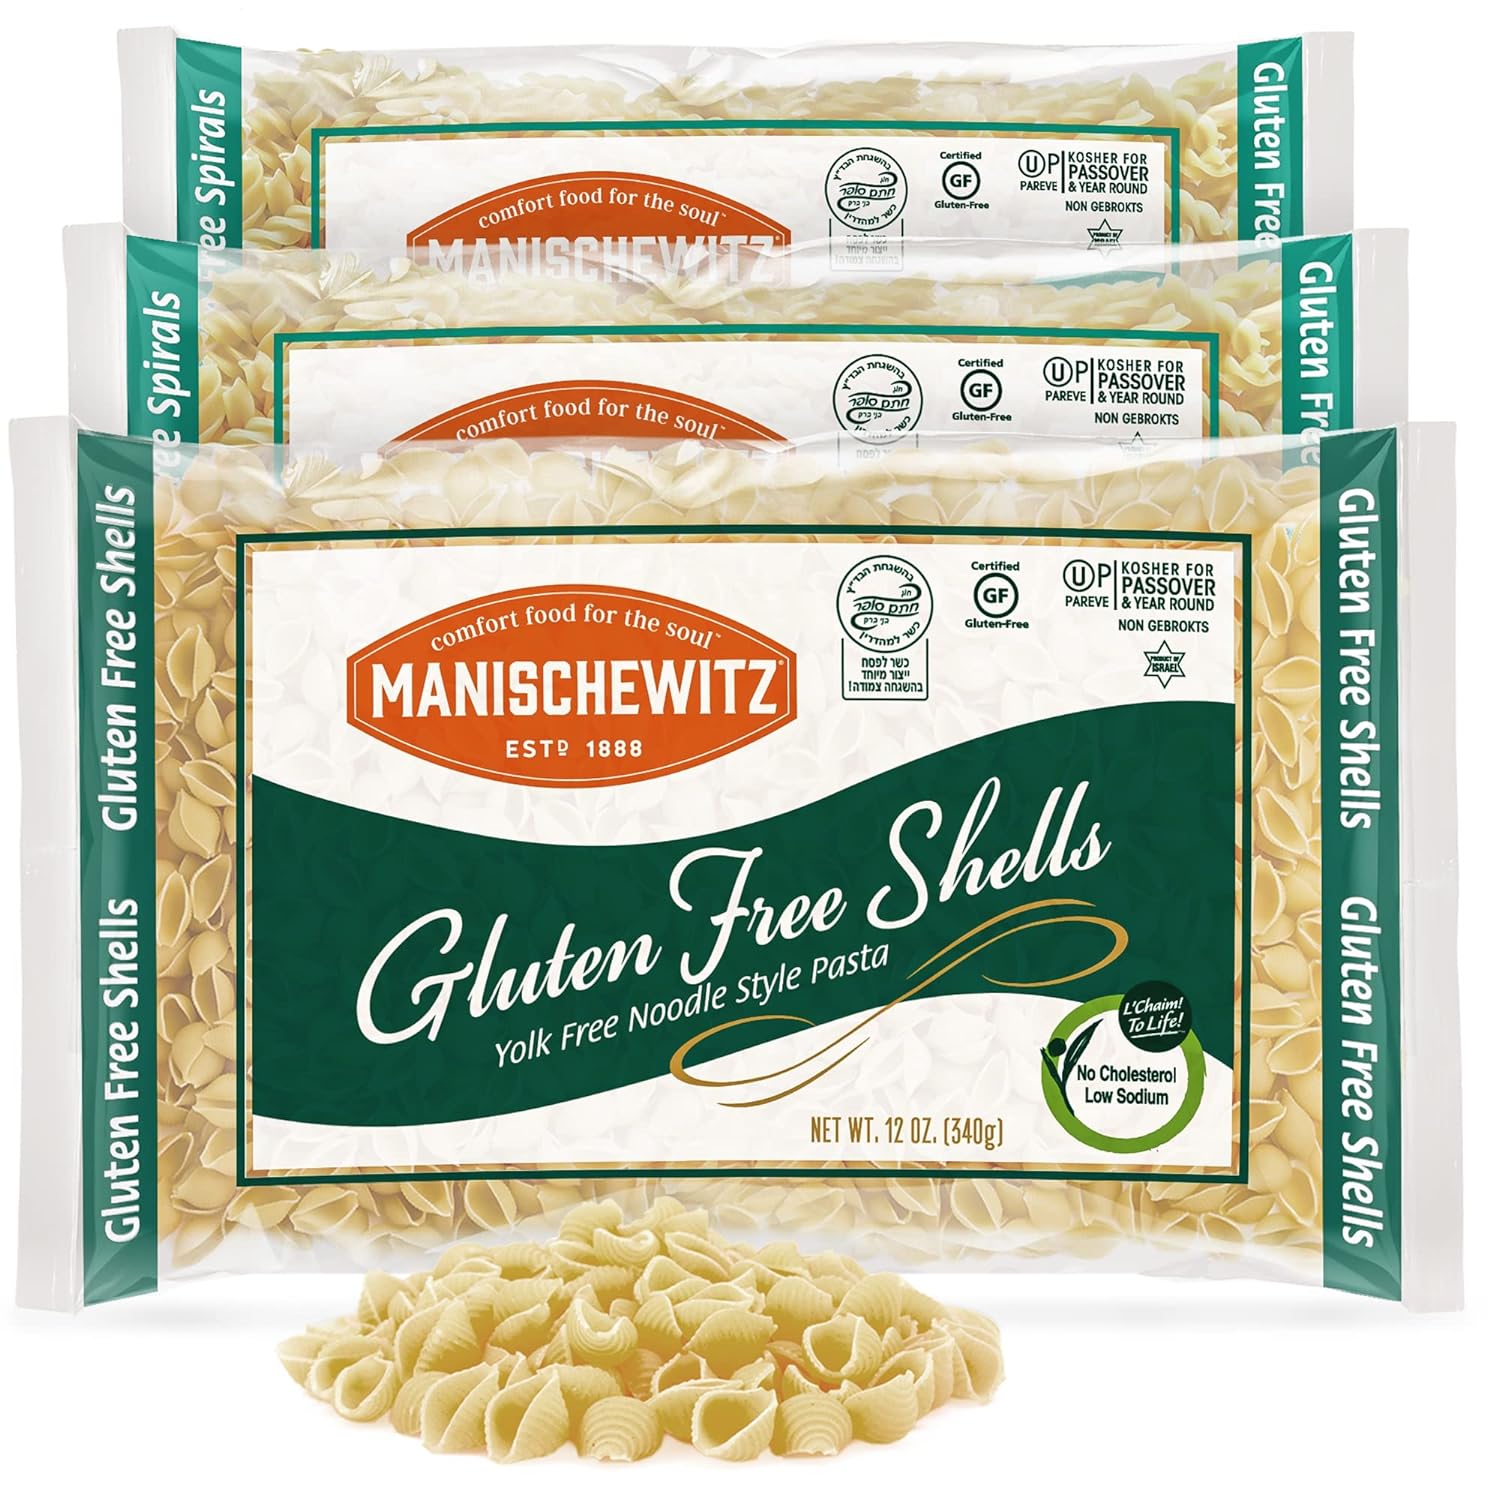 Manischewitz Gluten Free Shells, 12oz (3 Pack) All Natural, Yolk Free, Low Sodium, Kosher for Passover and Year Round